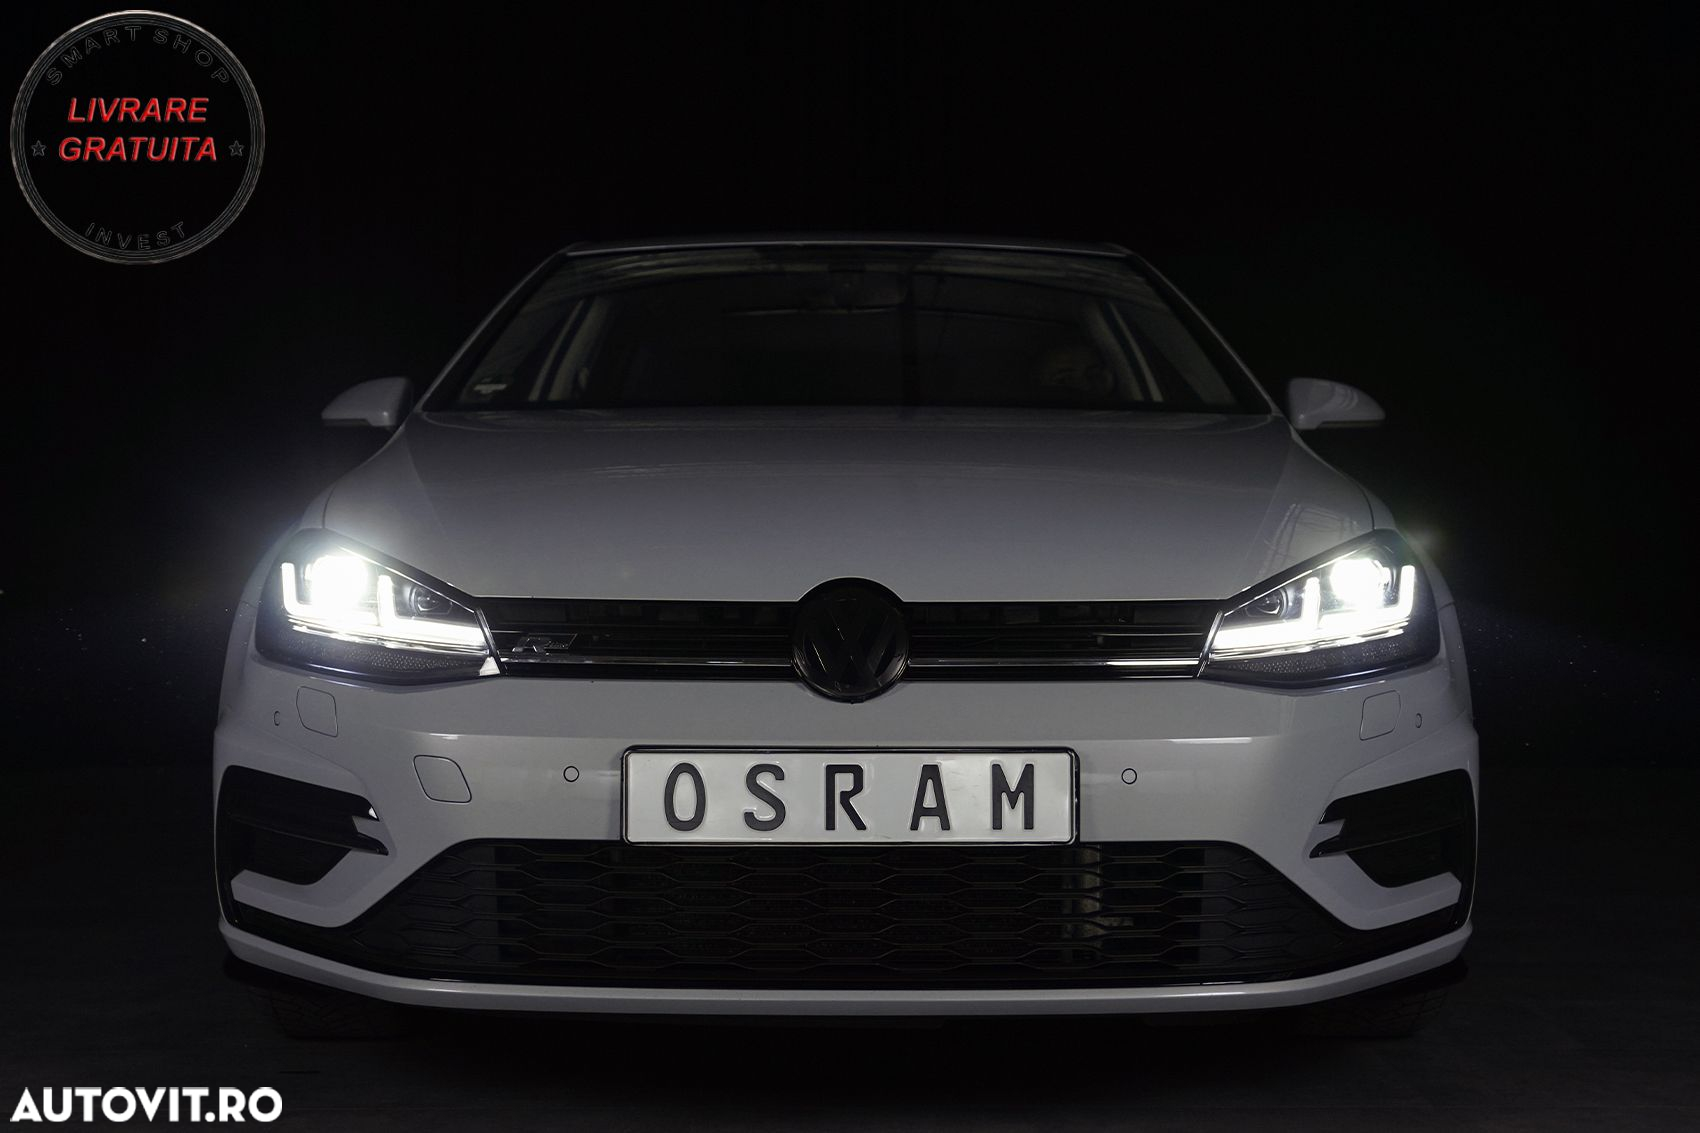 Faruri LEDriving Osram Full LED VW Golf 7.5 VII Facelift (2017-2020) pentru haloge- livrare gratuita - 19